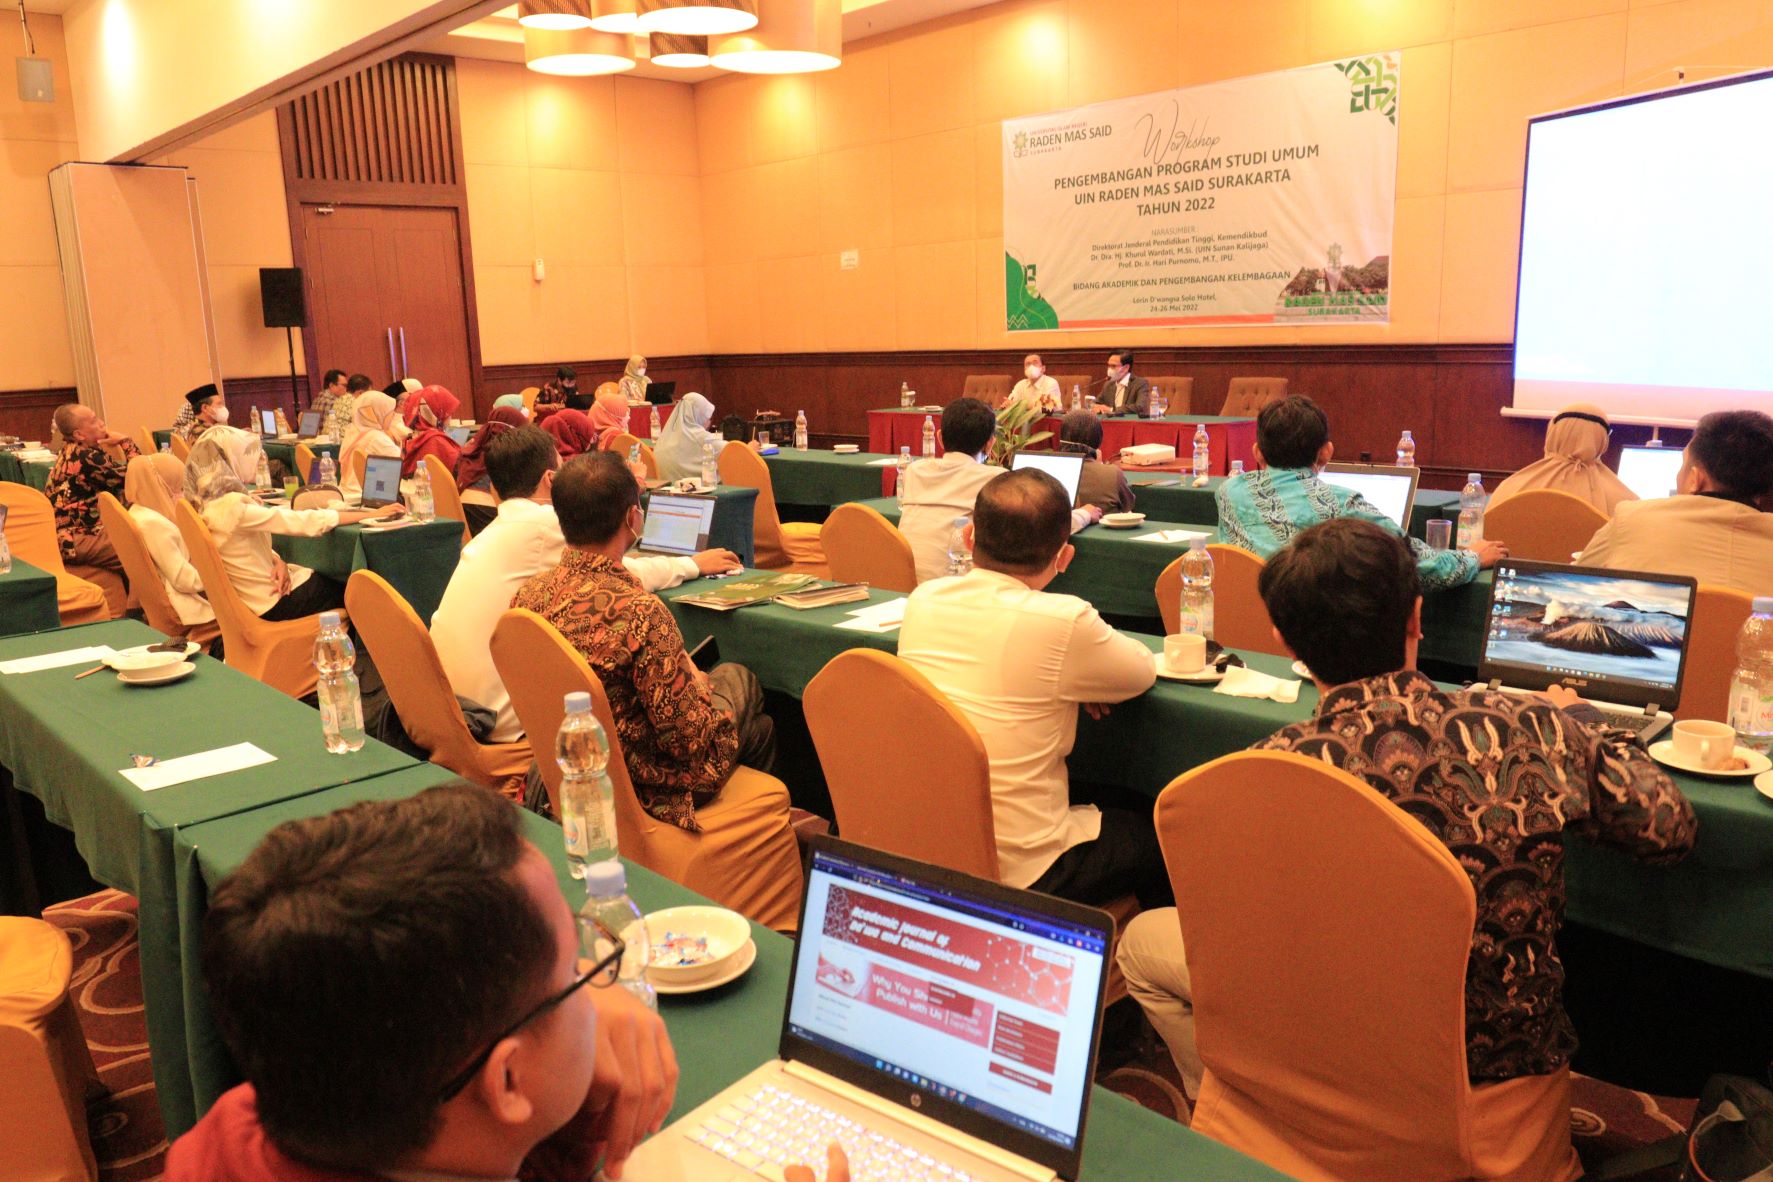 Kebut Tanggung Jawab Pengembangan Pasca Alih Status, UIN Raden Mas Said Selenggarakan Workshop Pengembangan Prodi Umum